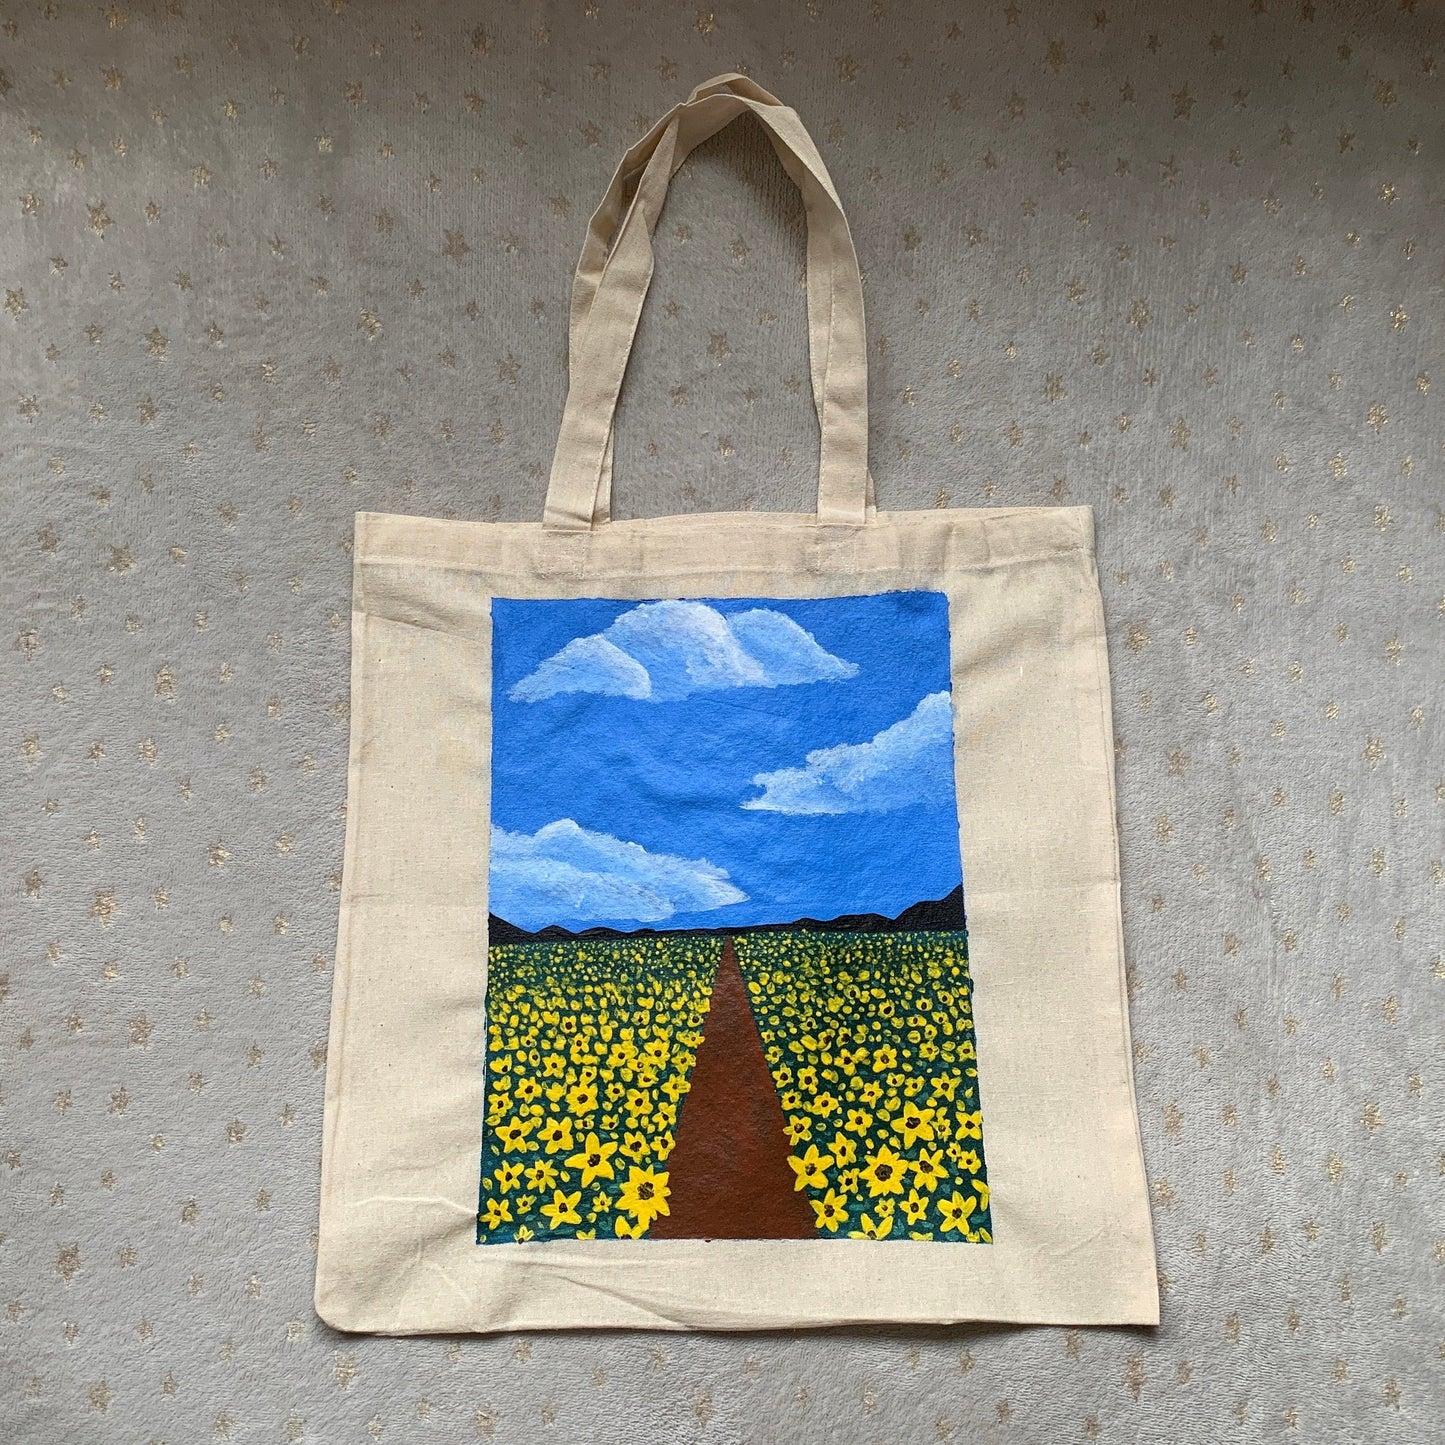 Mystery Tote Bag, Surprise Custom Painted Bag